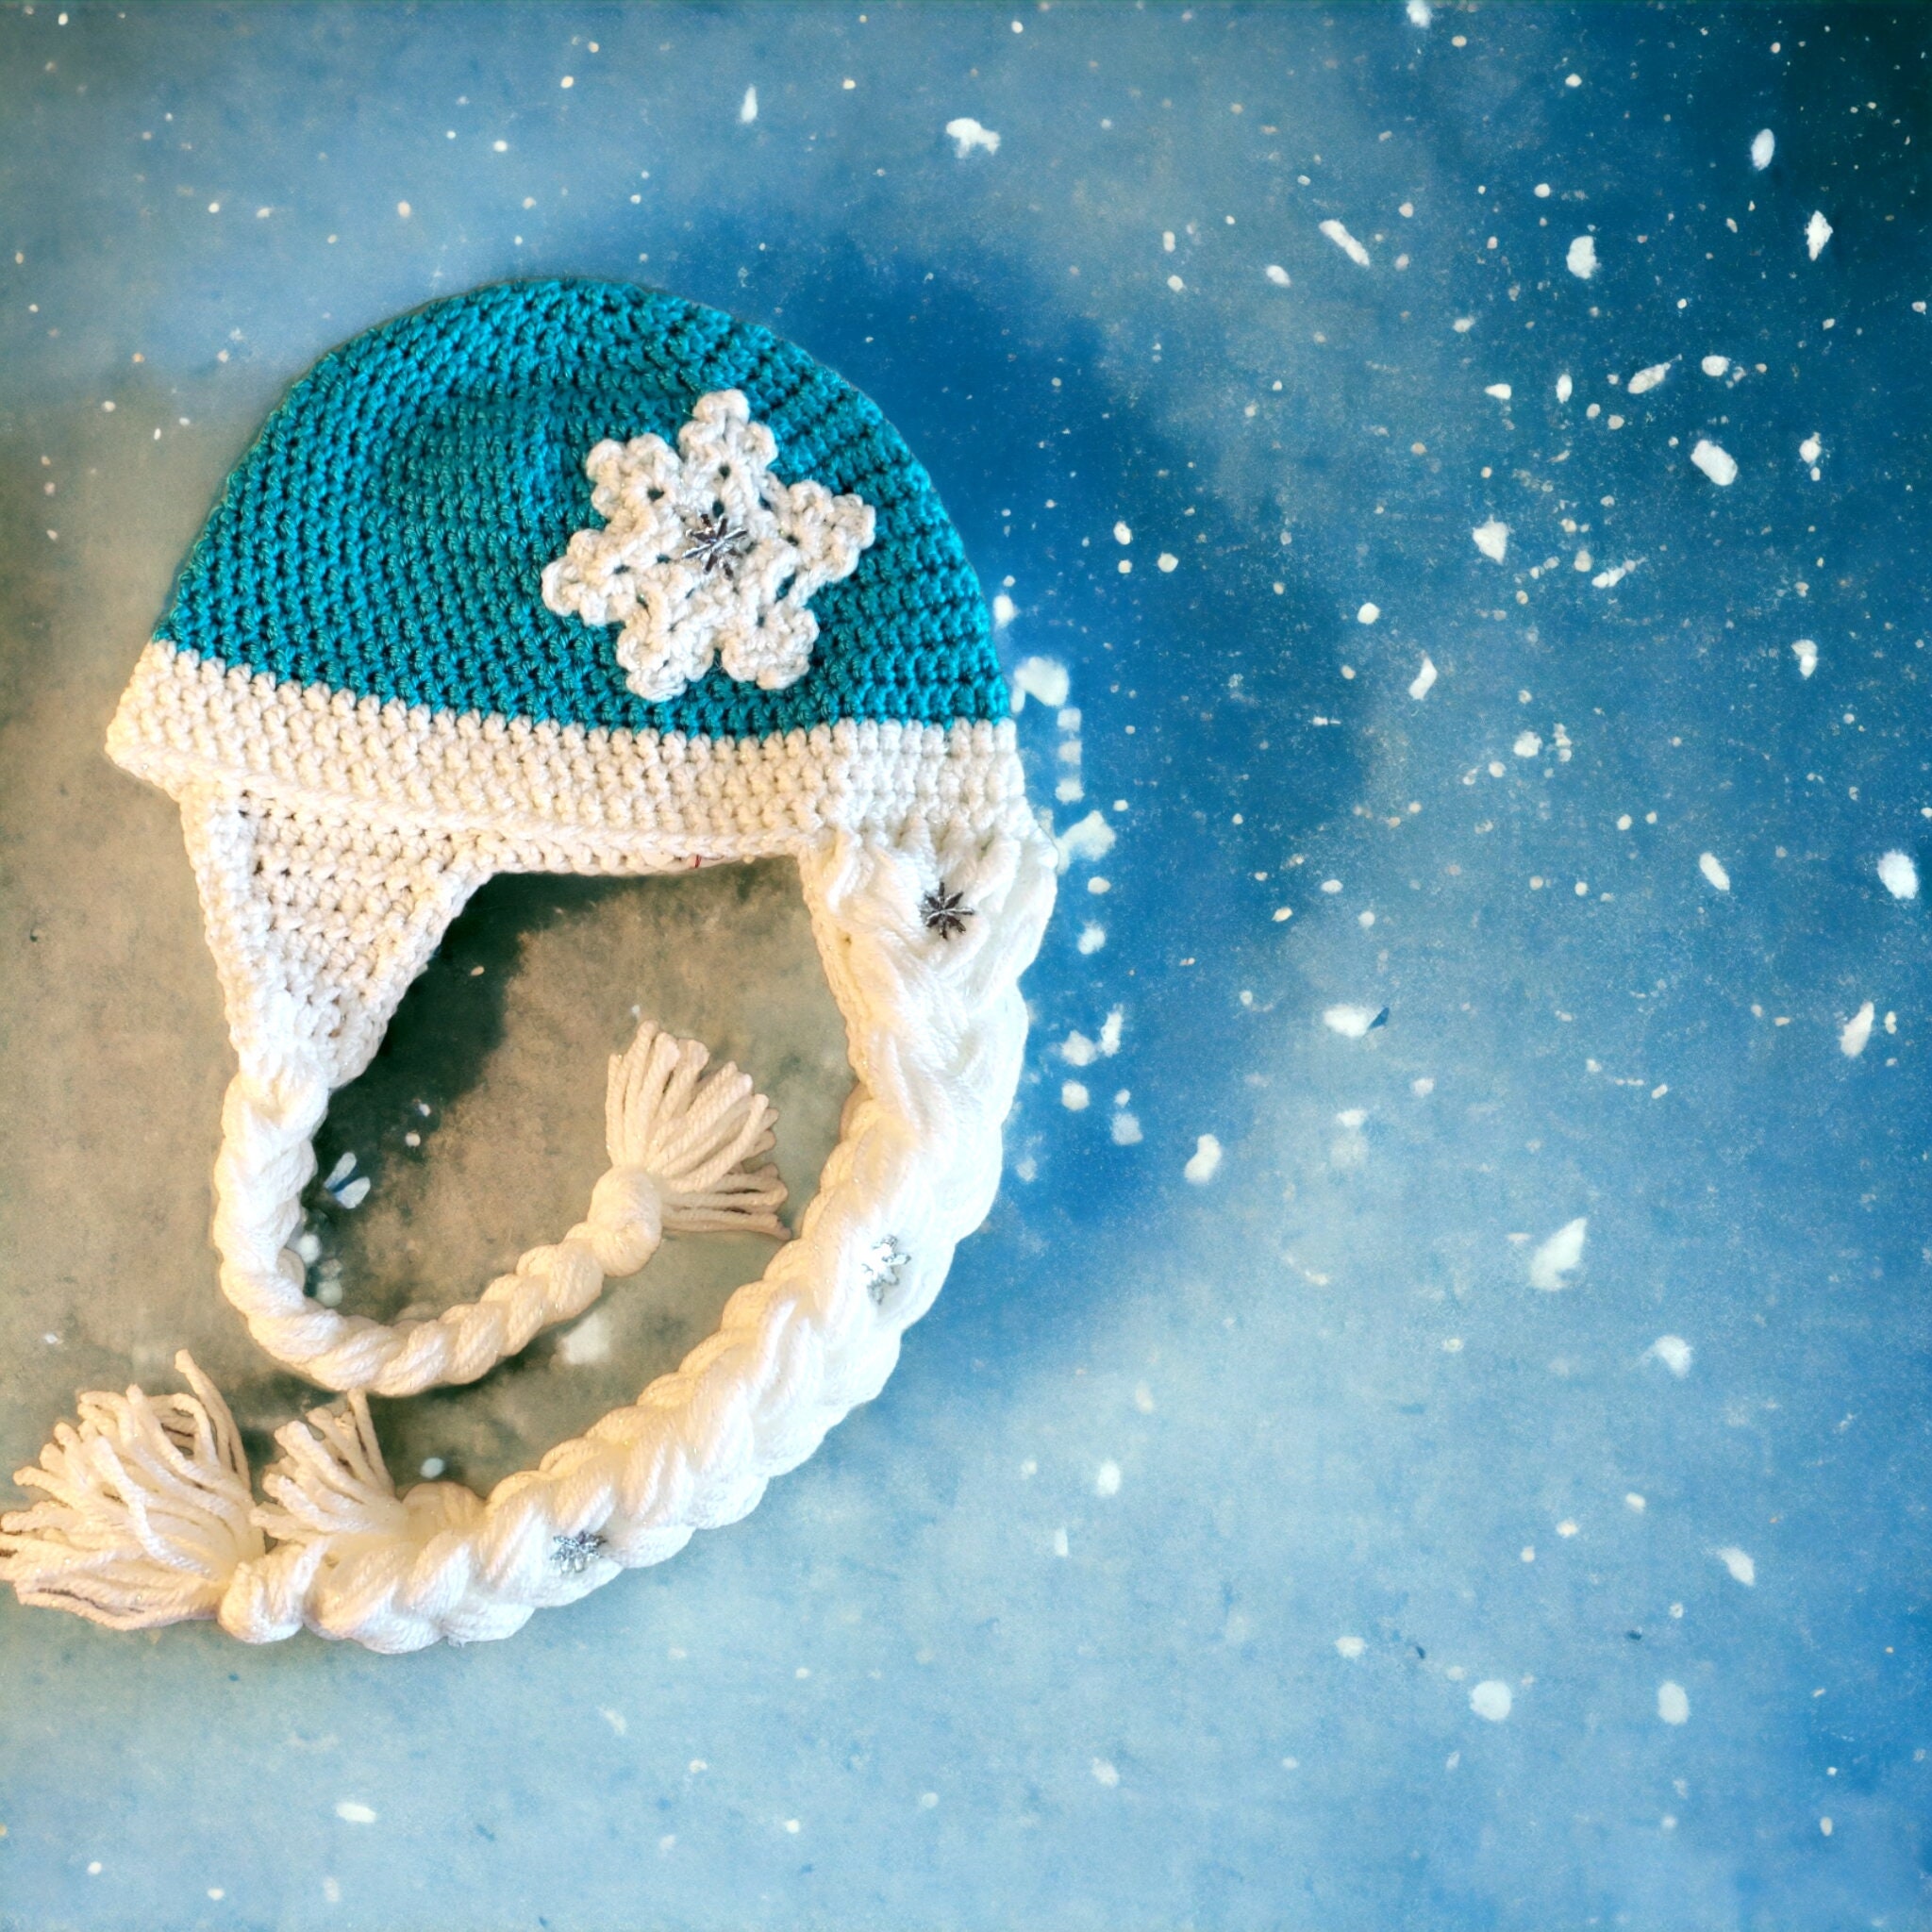 Custom Frozen Inspired Elsa Hand Crochet Hat With Long White Hair, size  3-5years